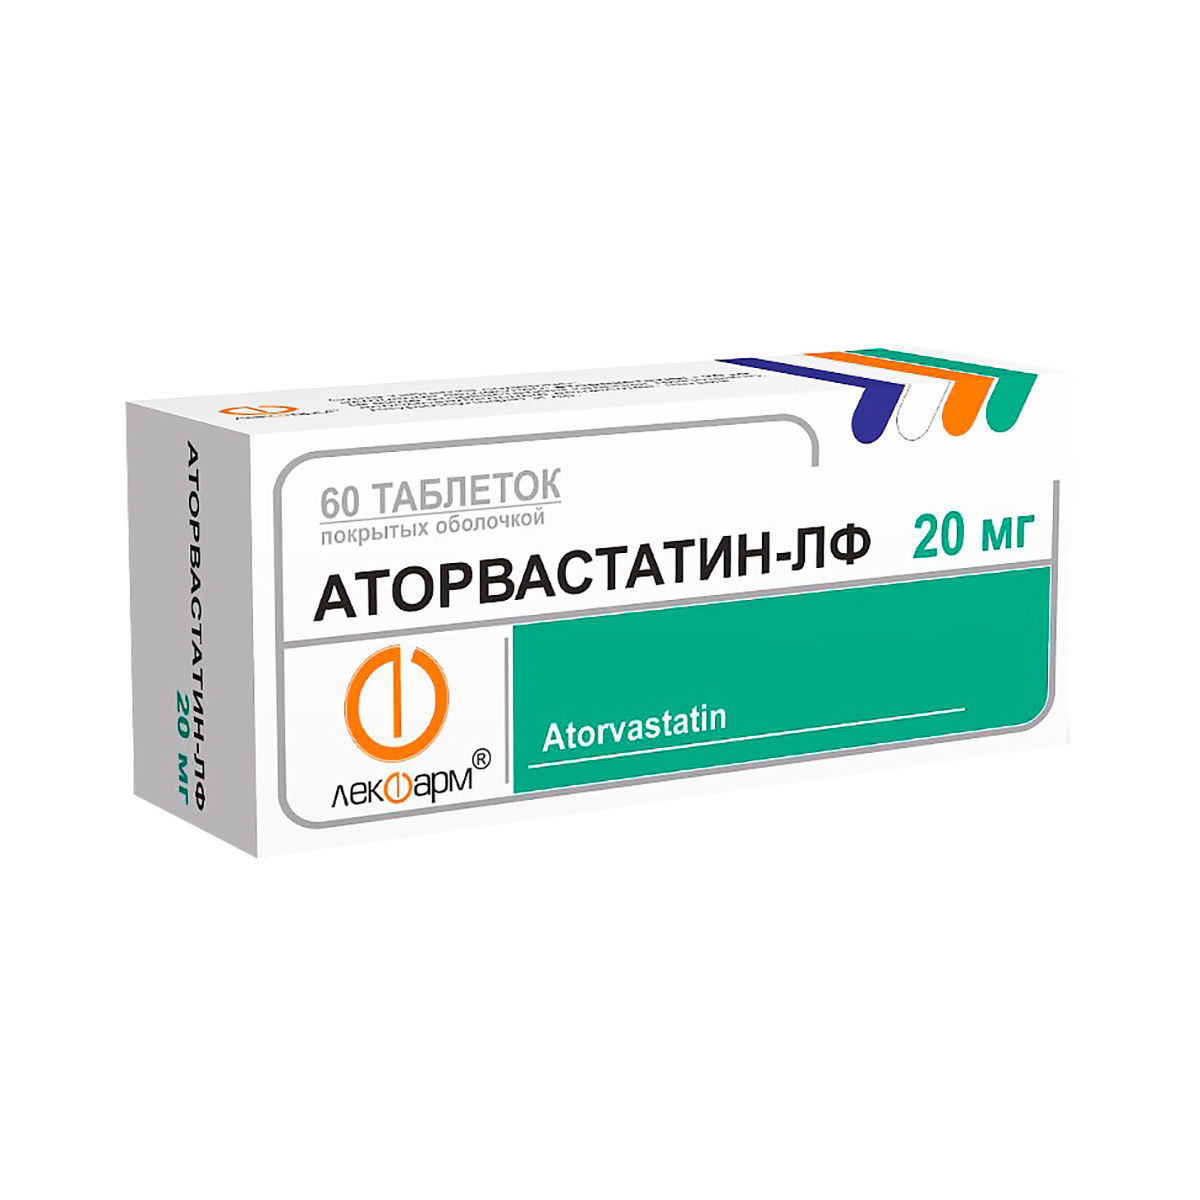 Аторвастатин-ЛФ 20 мг таблетки покрытые оболочкой 60 шт